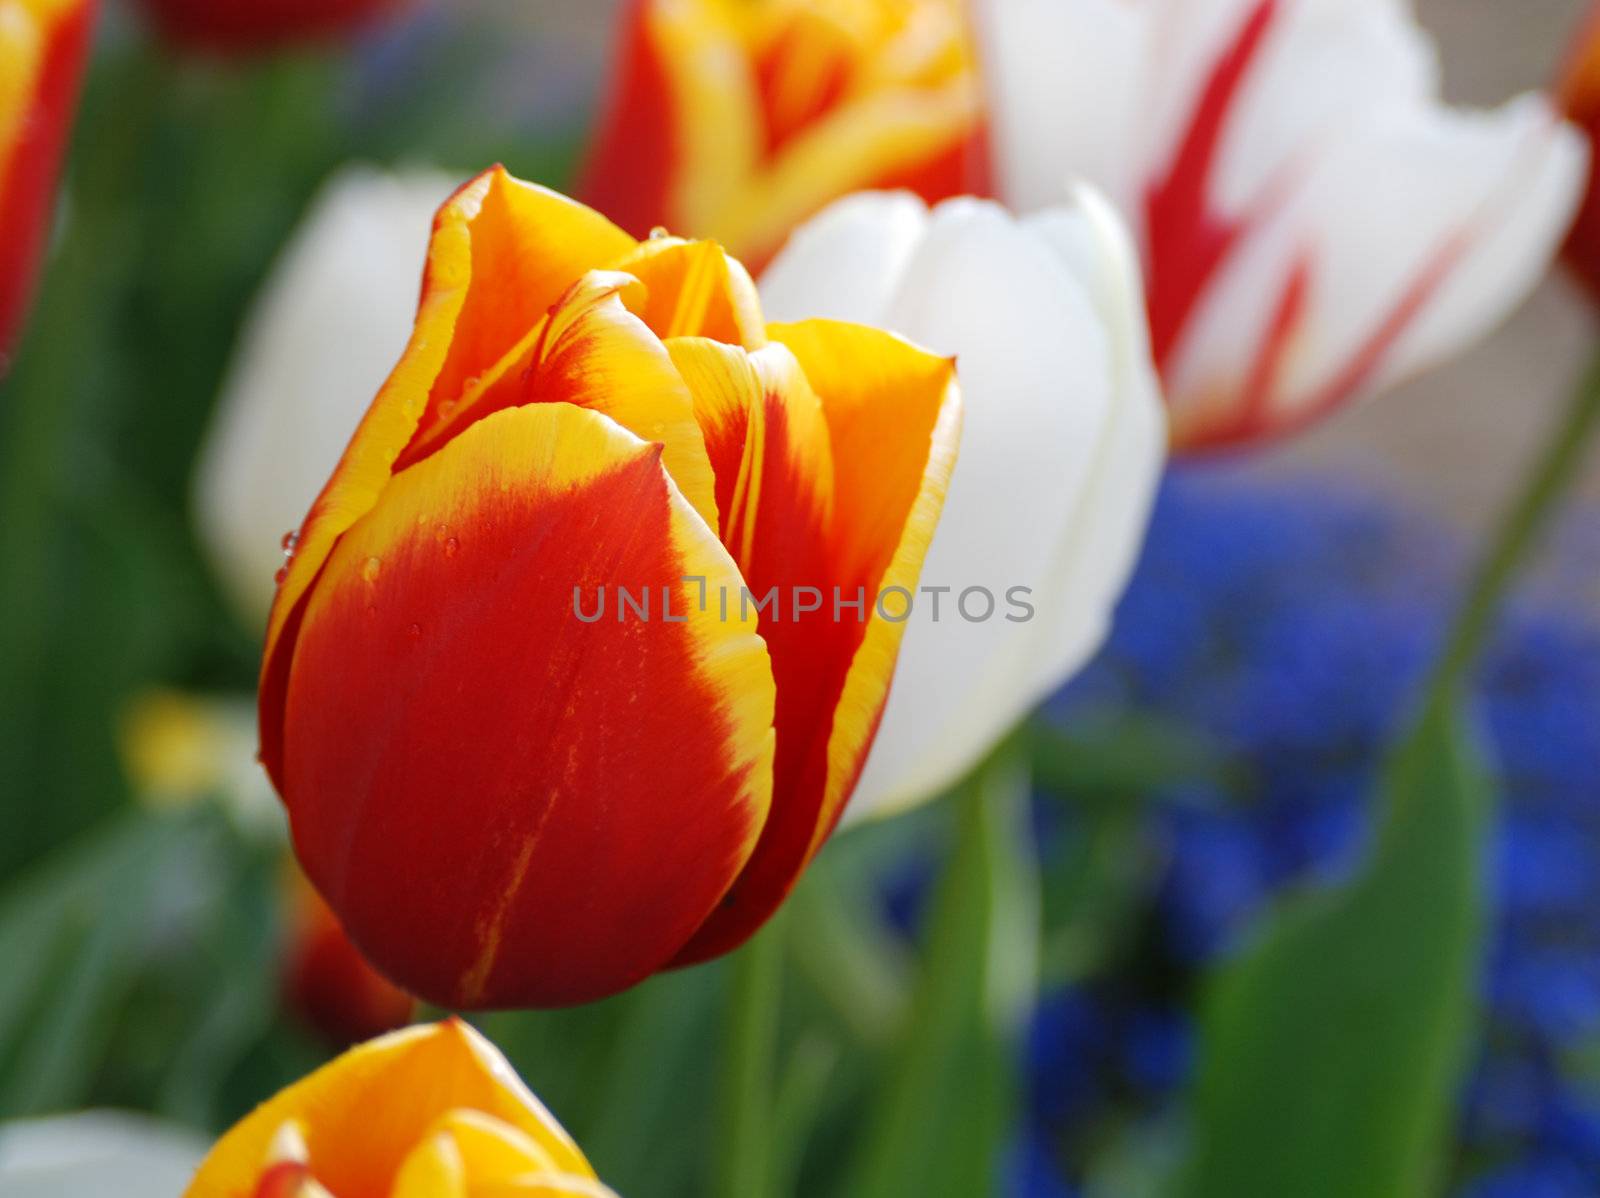 The beatiful tulips in the garden